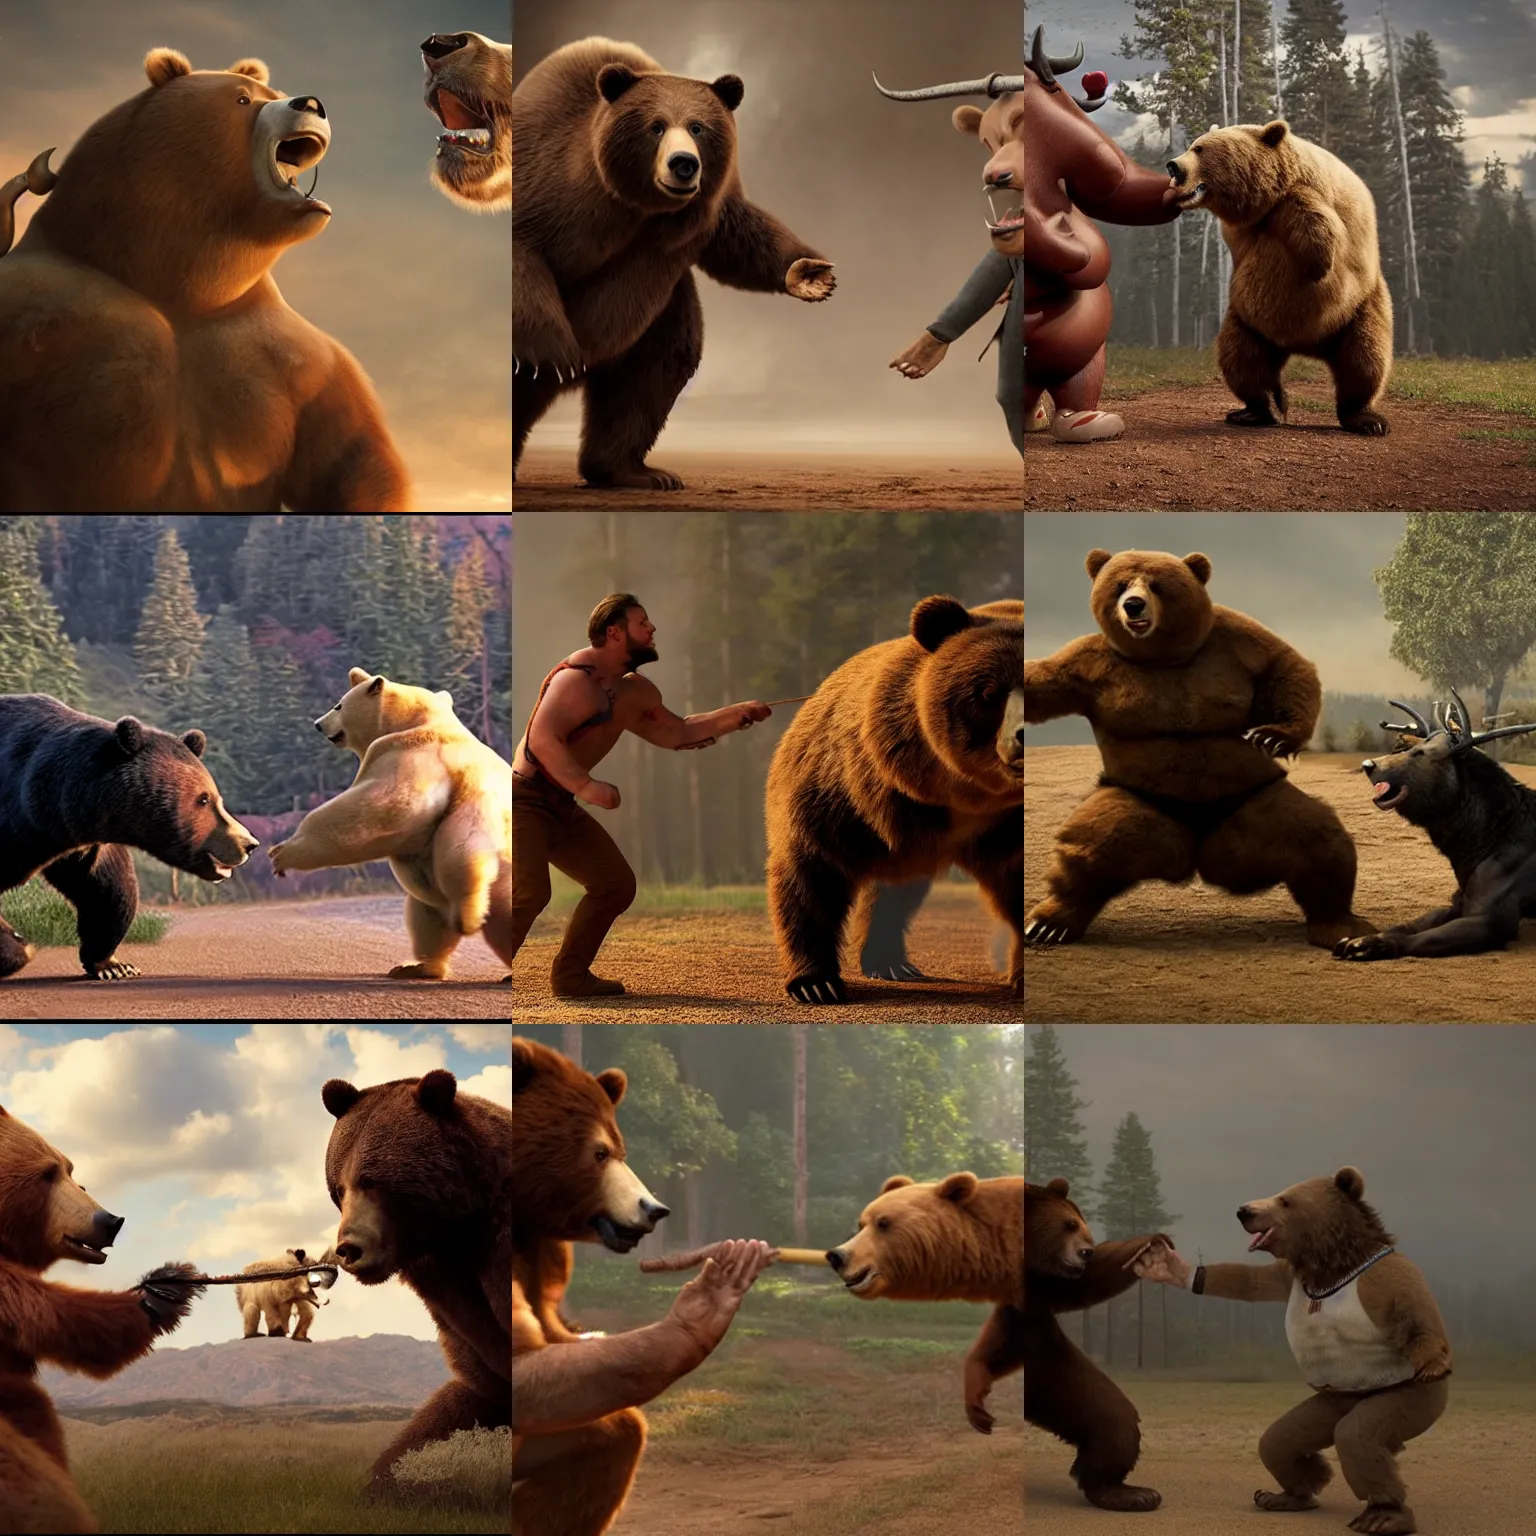 Prompt: movie still scene of anthropomorphic bear fighting an anthropomorphic bull 8k